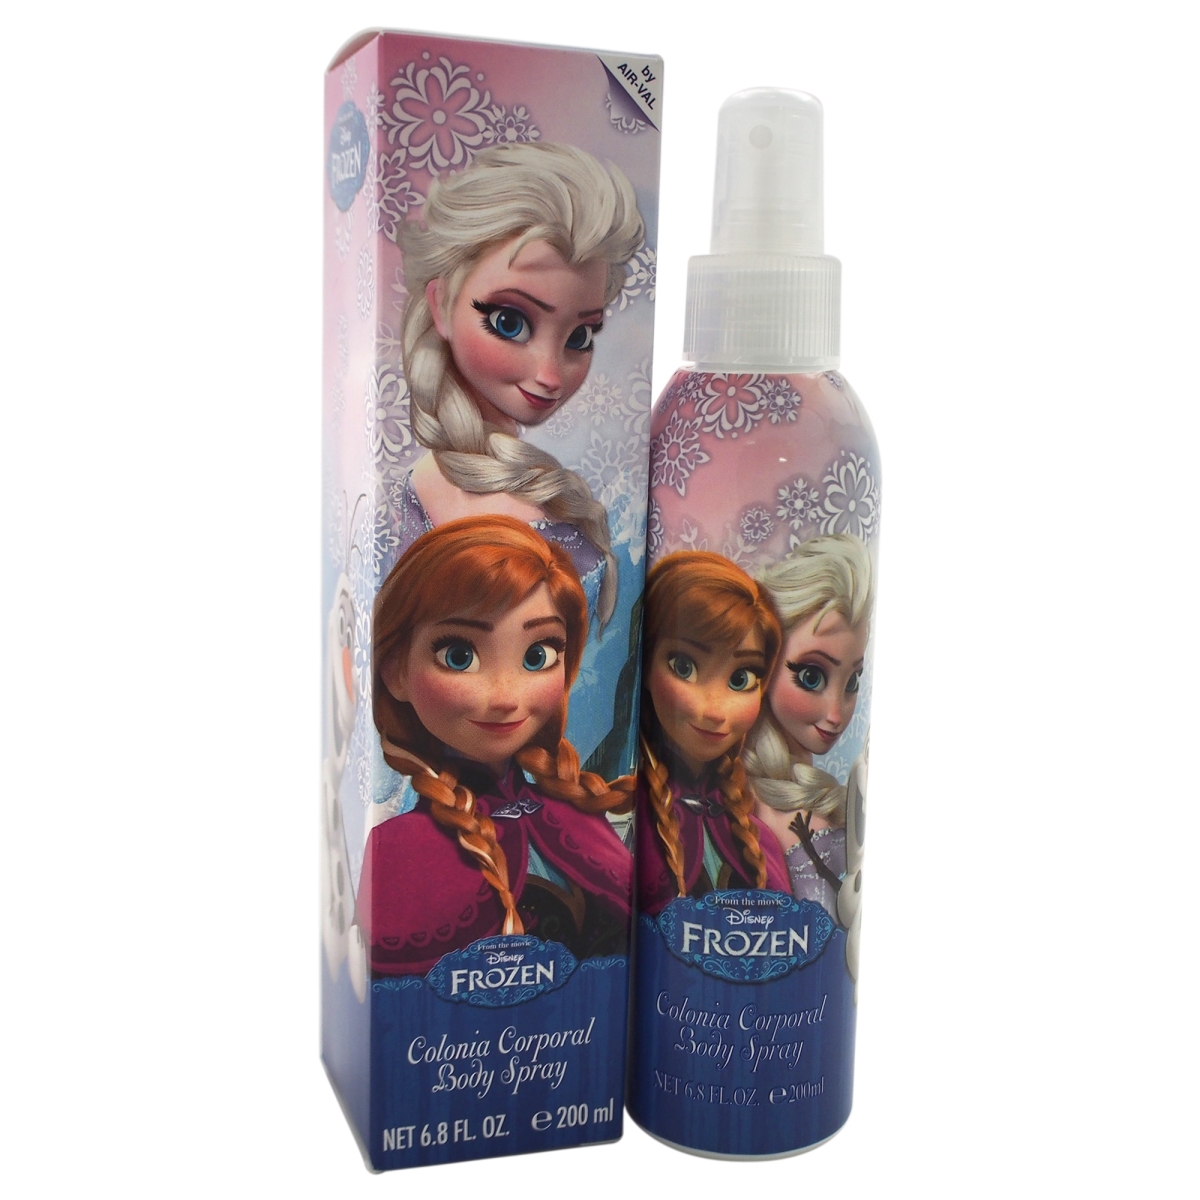 K-bb-1062 6.8 Oz Frozen Body Spray For Kids